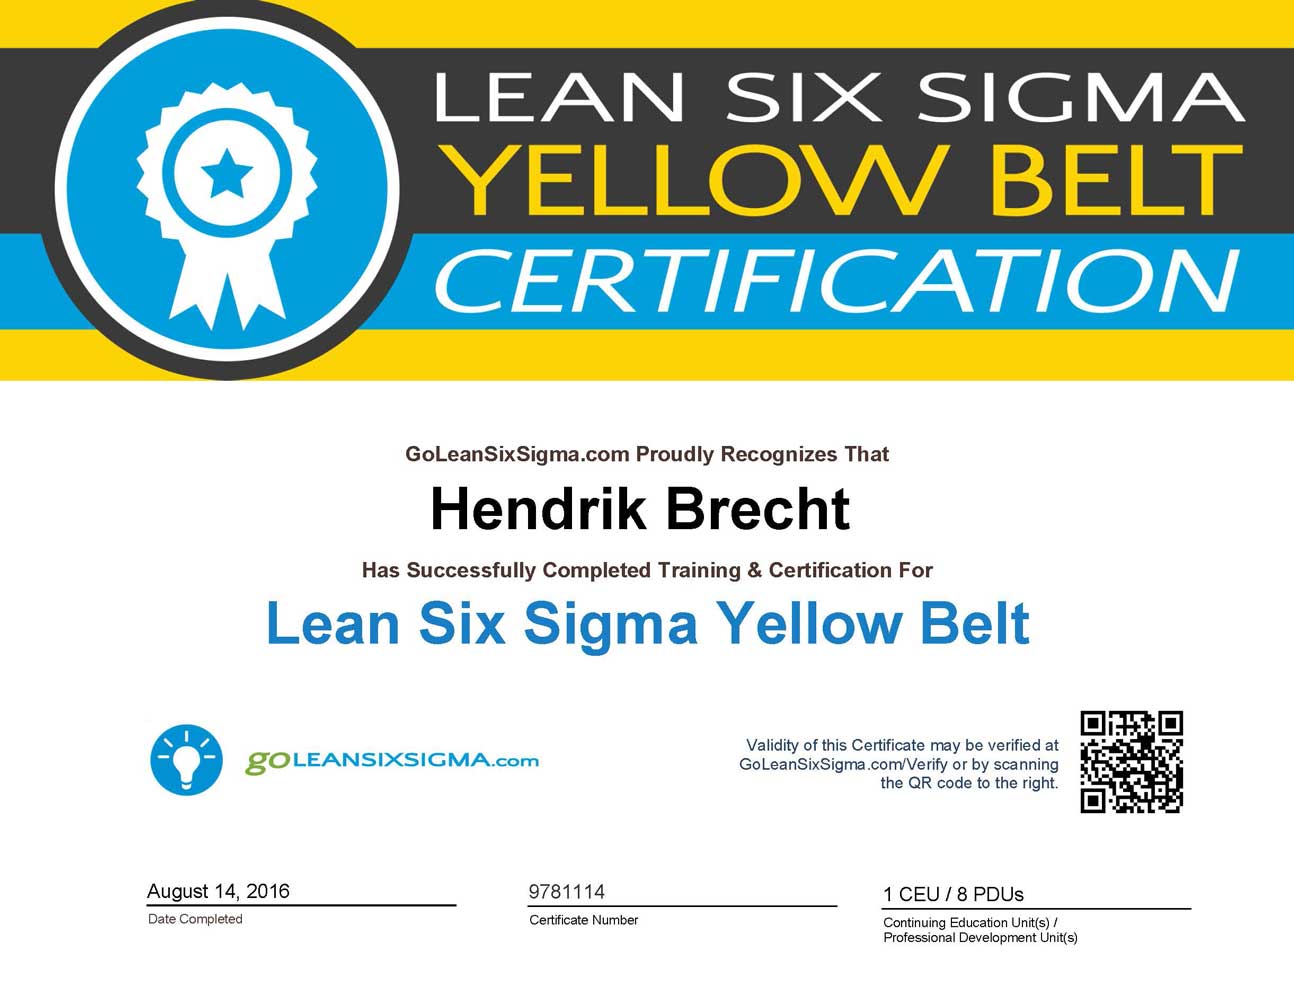 Lean Six Sigma - Yellow Belt Certificate, Hendrik Brecht